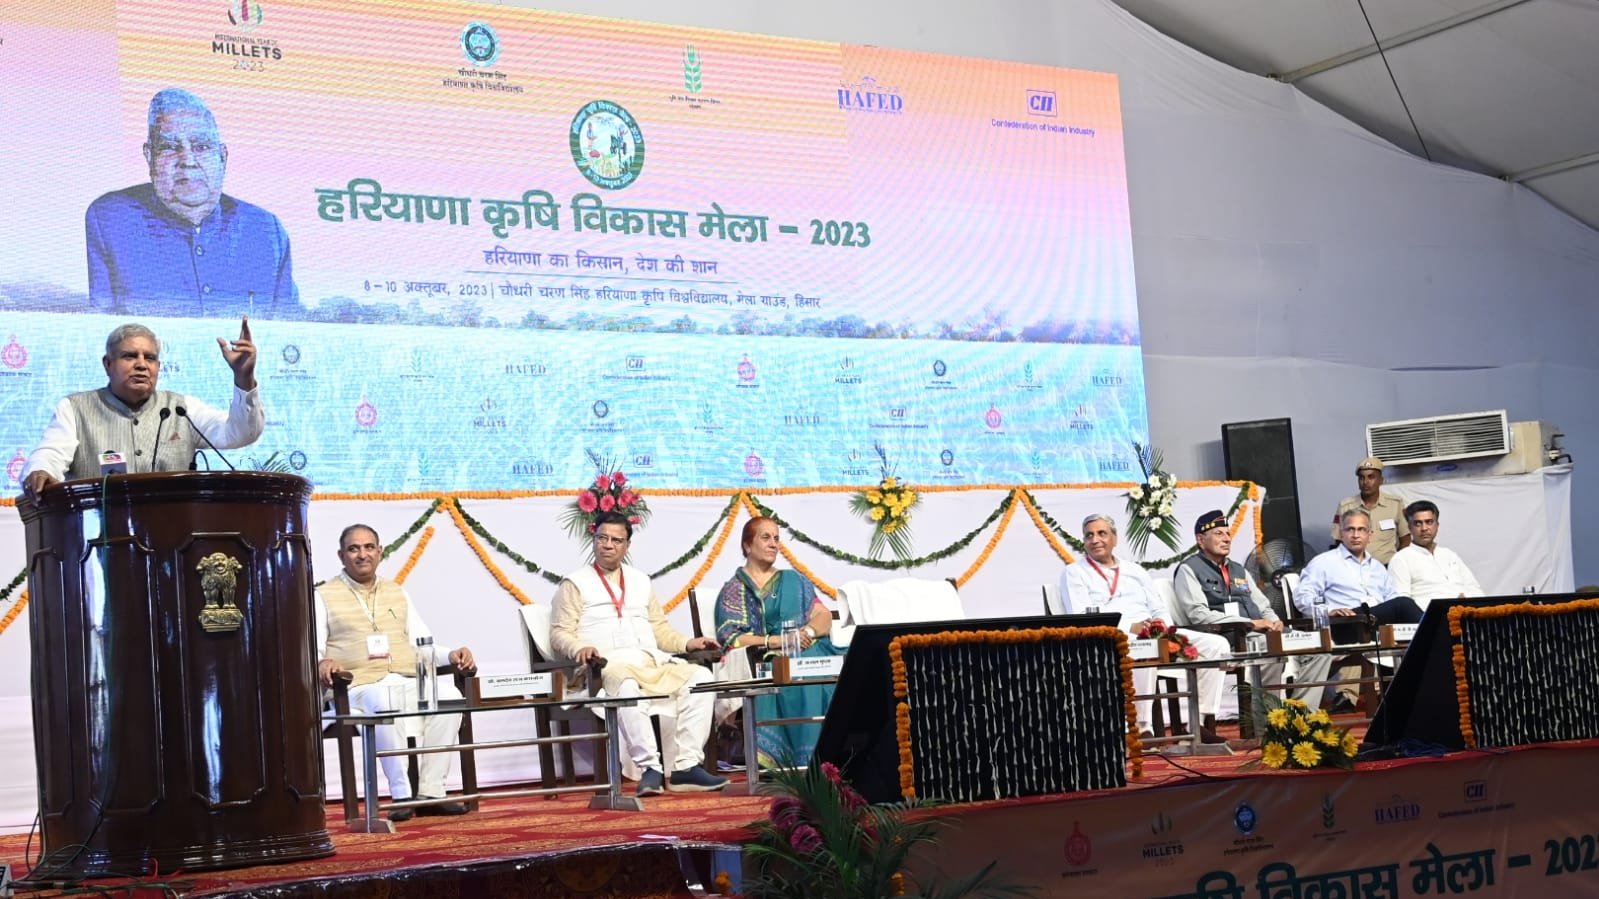 The Vice-President, Shri Jagdeep Dhankhar addressing the gathering at Chaudhary Charan Singh Haryana Agricultural University in Hisar, Haryana on October 8, 2023.